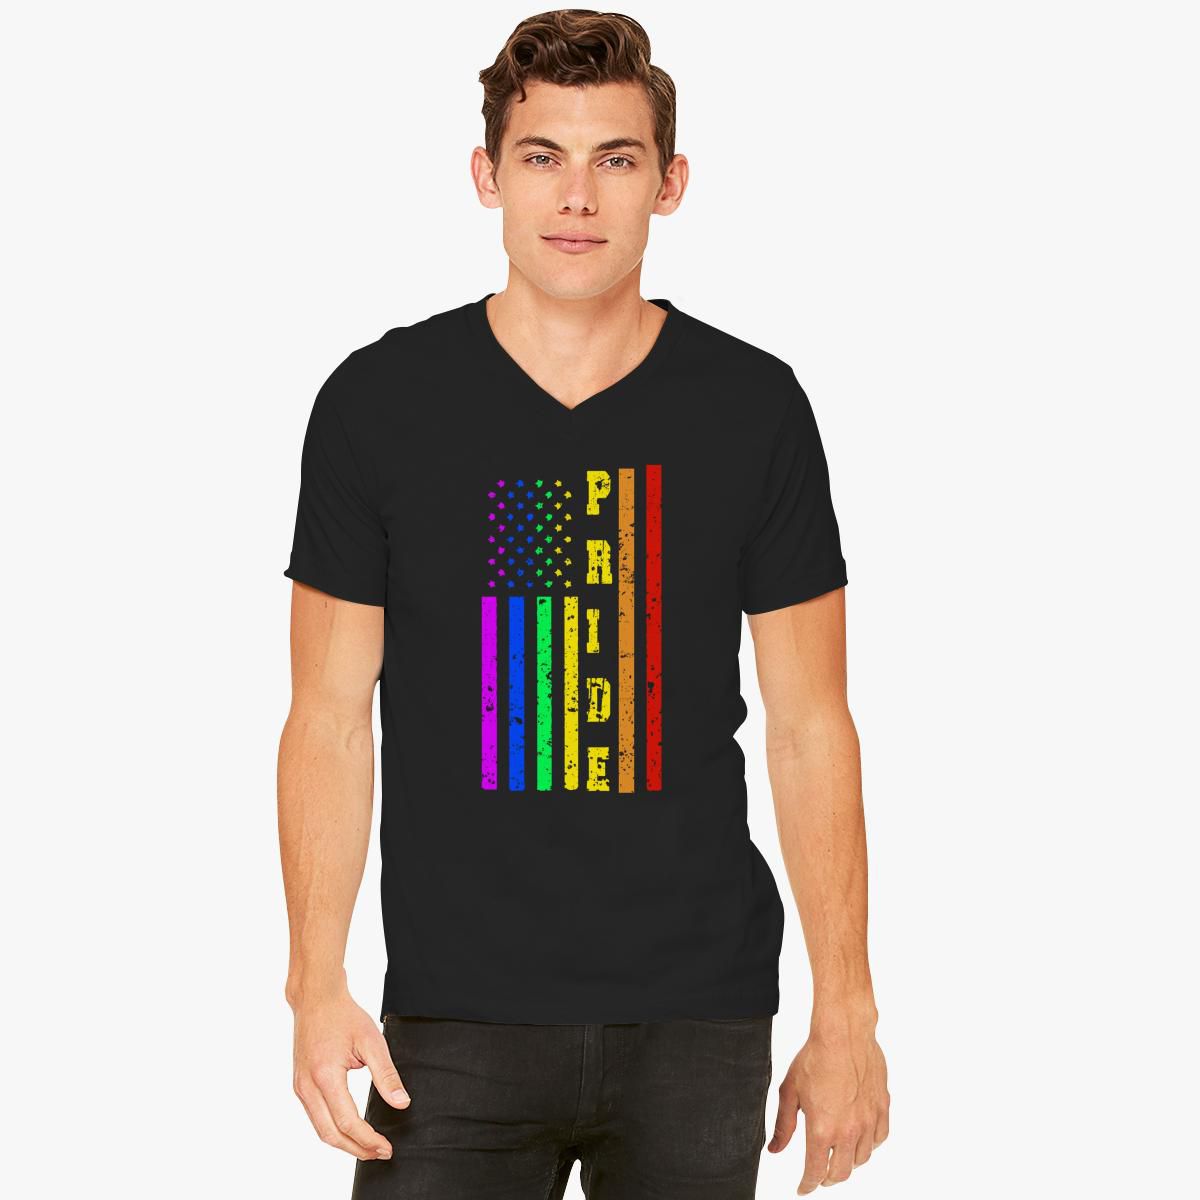 rainbow gay pride flag